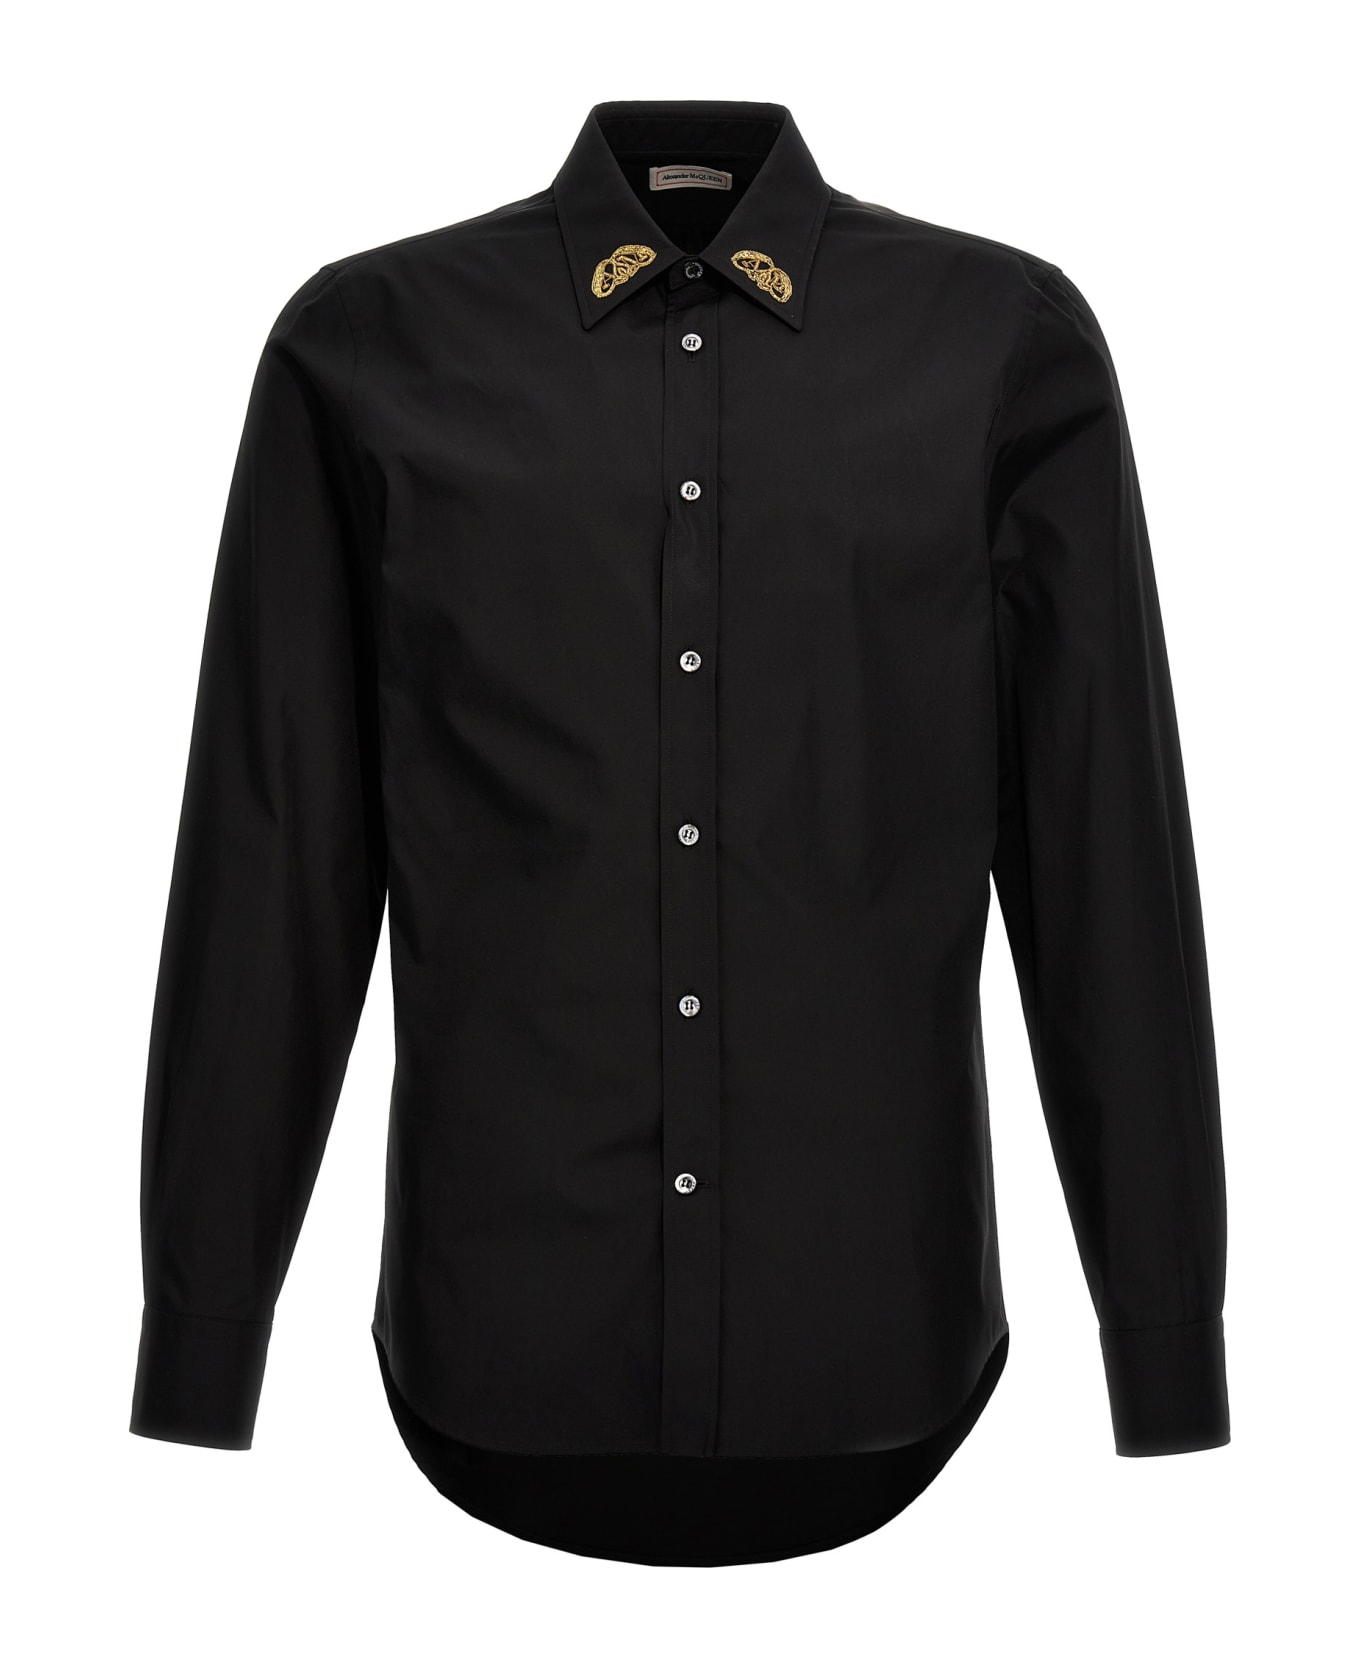 Alexander McQueen Embroidered Collar Shirt - Black